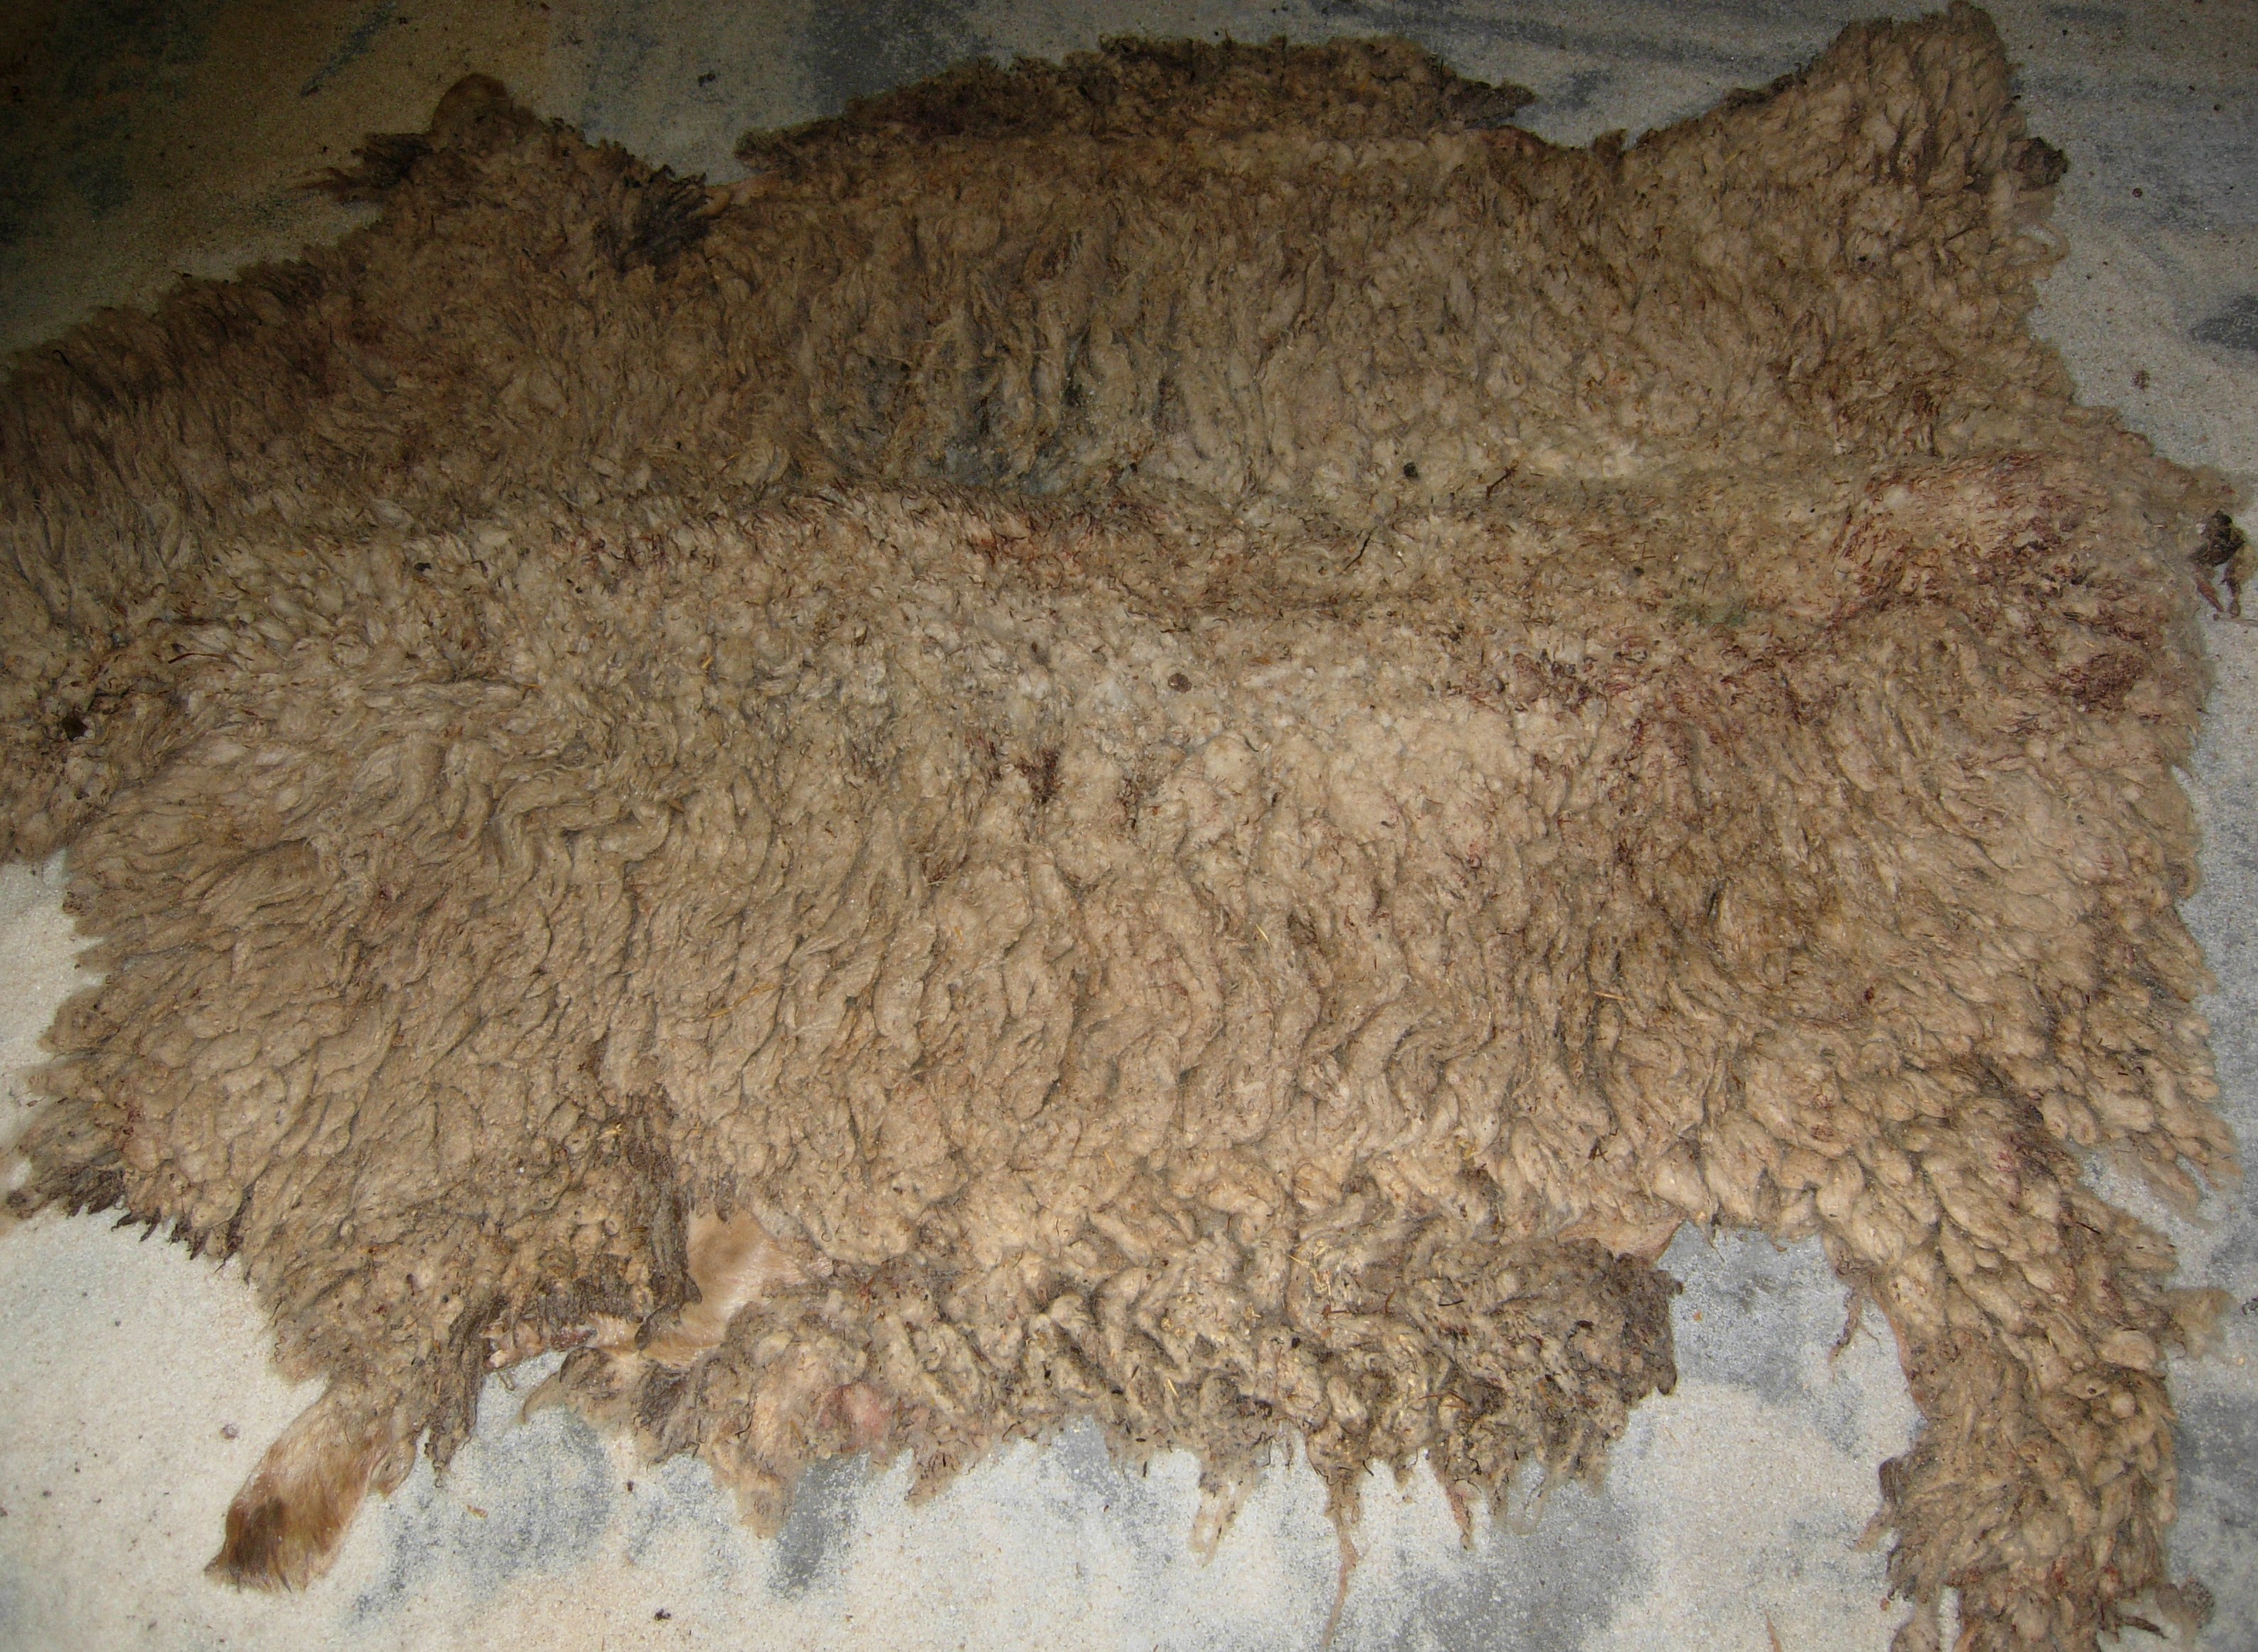 wet salted nappa sheep skins / Spain